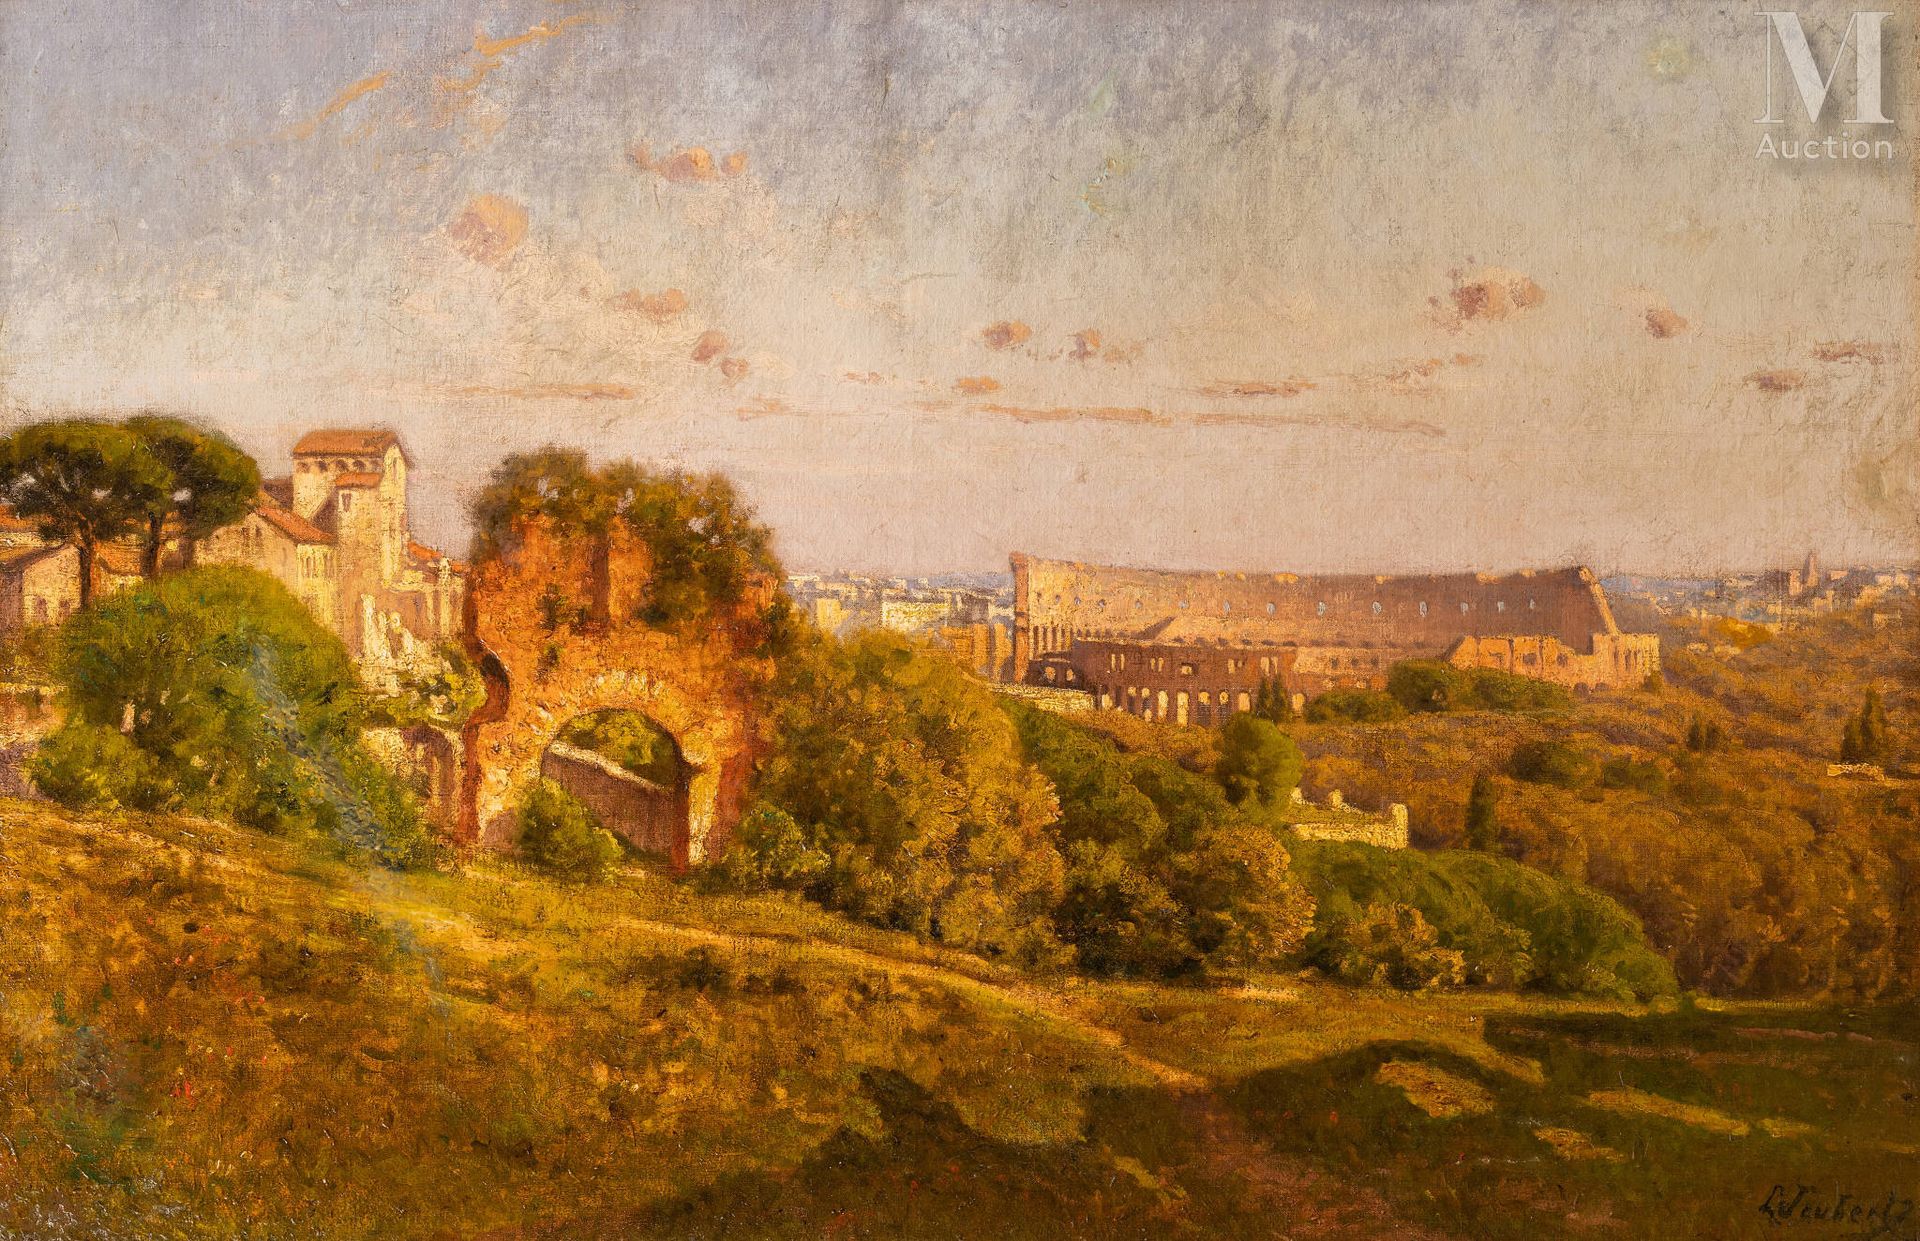 Léon JOUBERT (Quimper 1851 - Paris 1928) 斗兽场遗址，帕拉蒂纳的景色



原创布面油画

65,5 x 100 cm
&hellip;